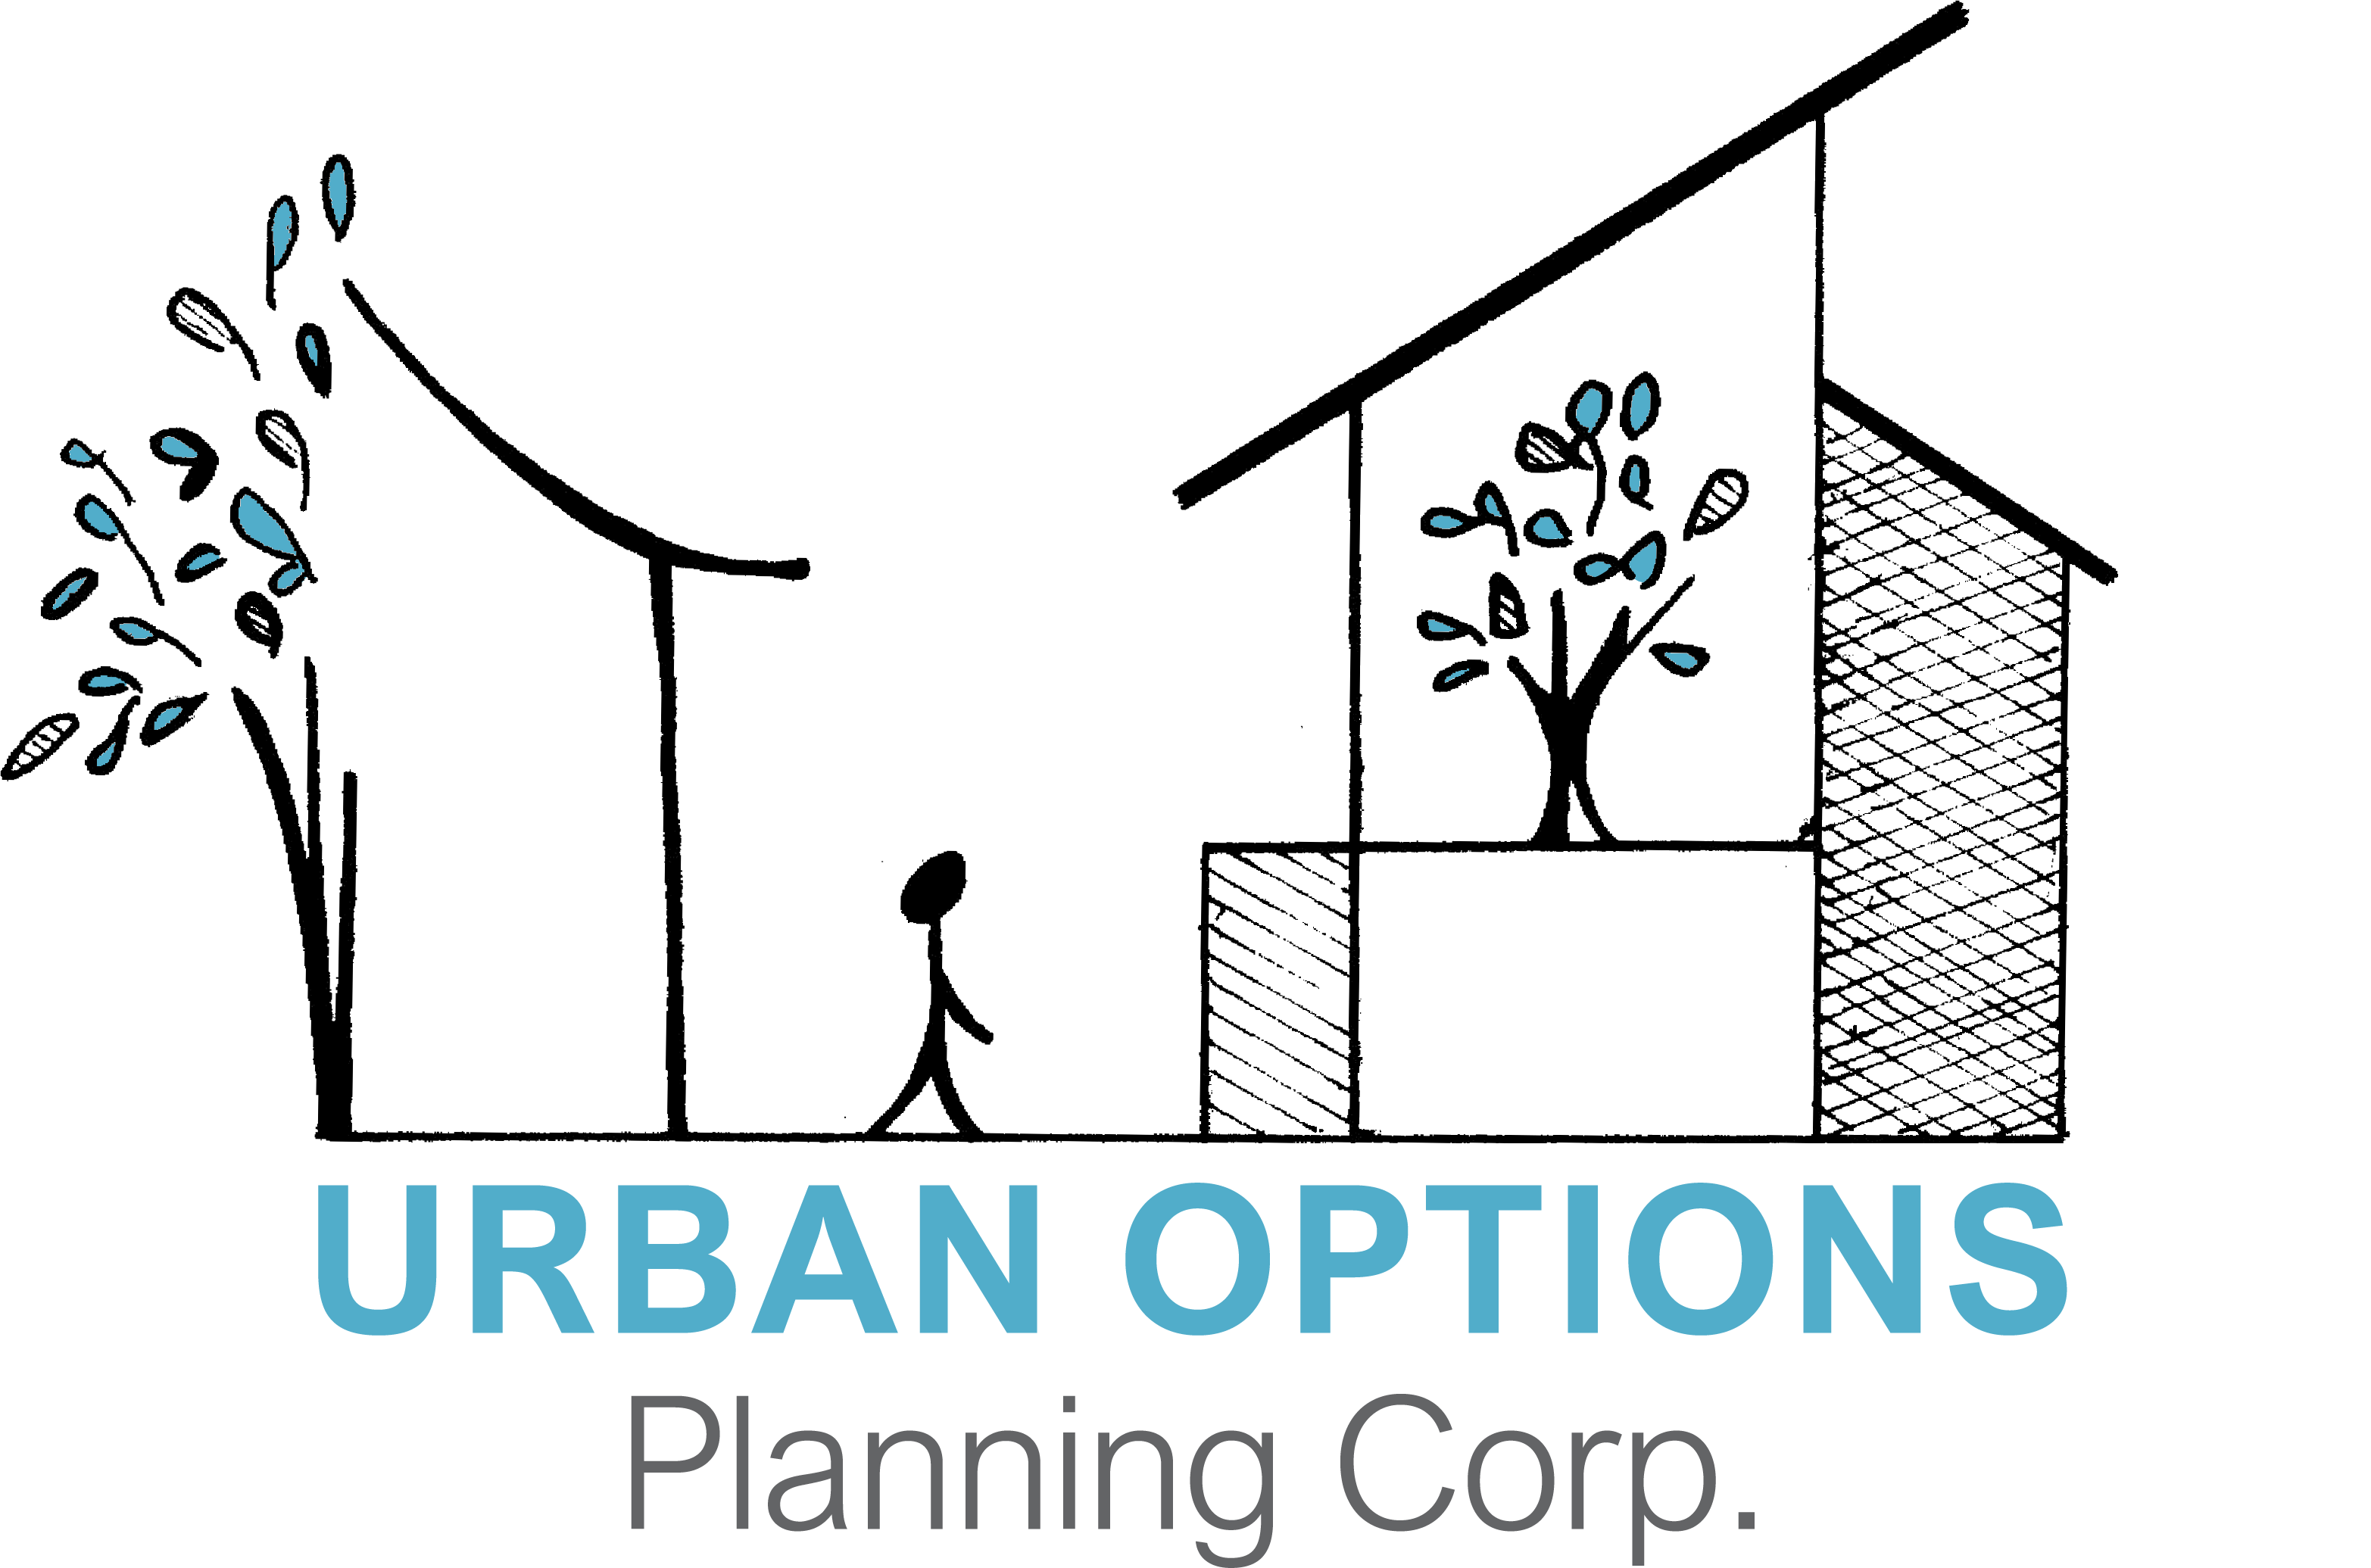 Urban Options Planning Corp.